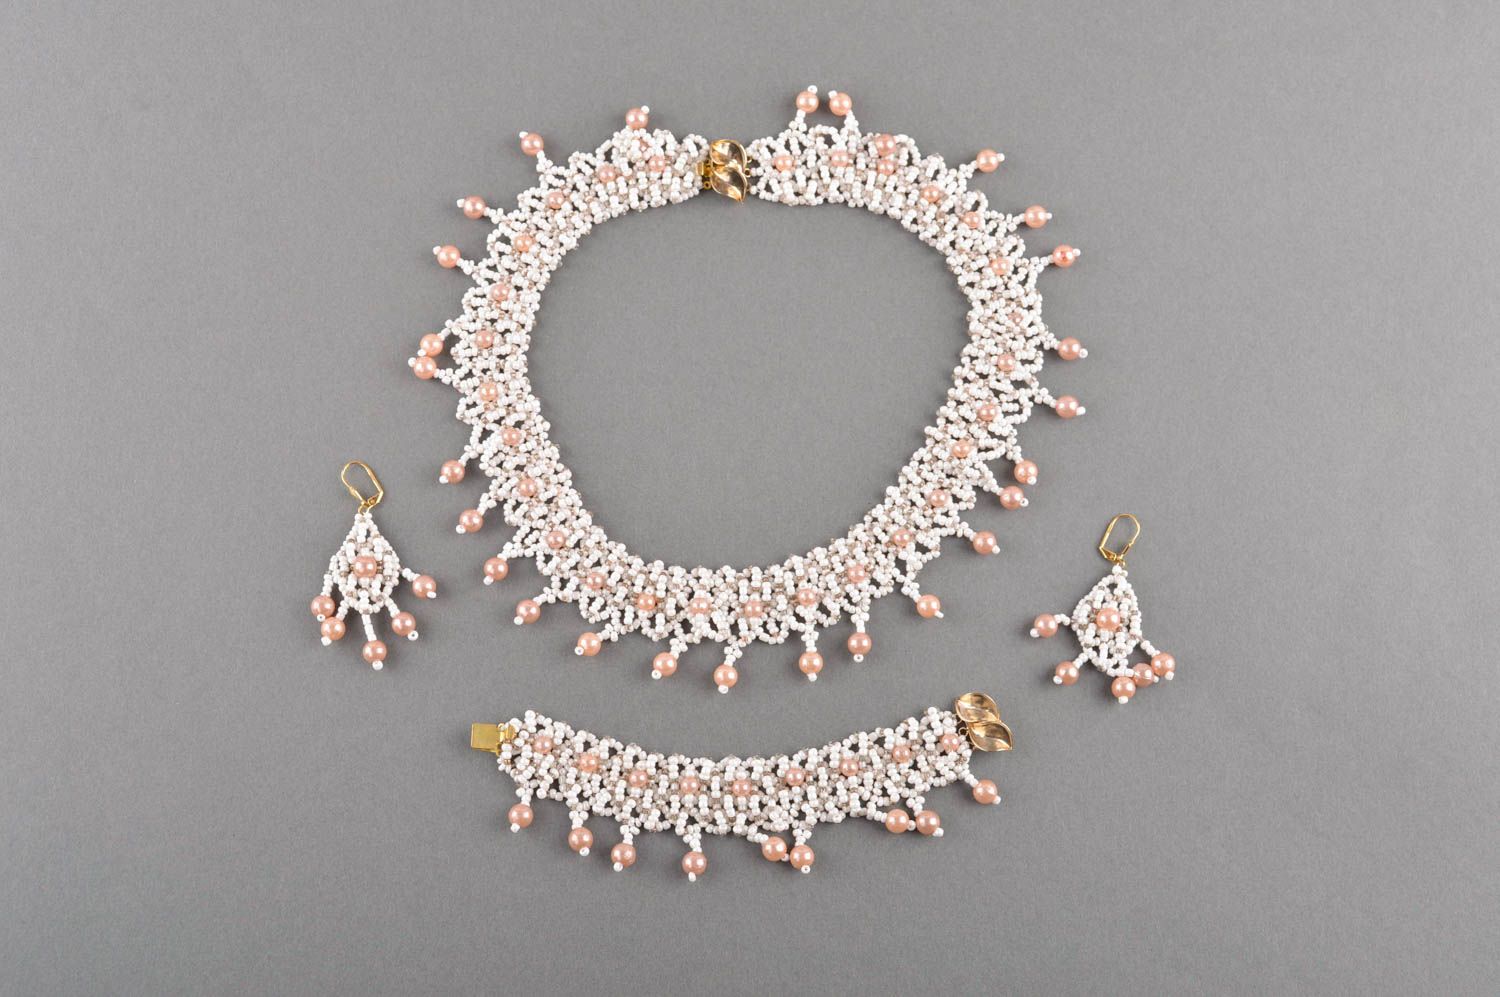 Handmade accessories beautiful jewelry gift ideas unusual gift for women photo 2